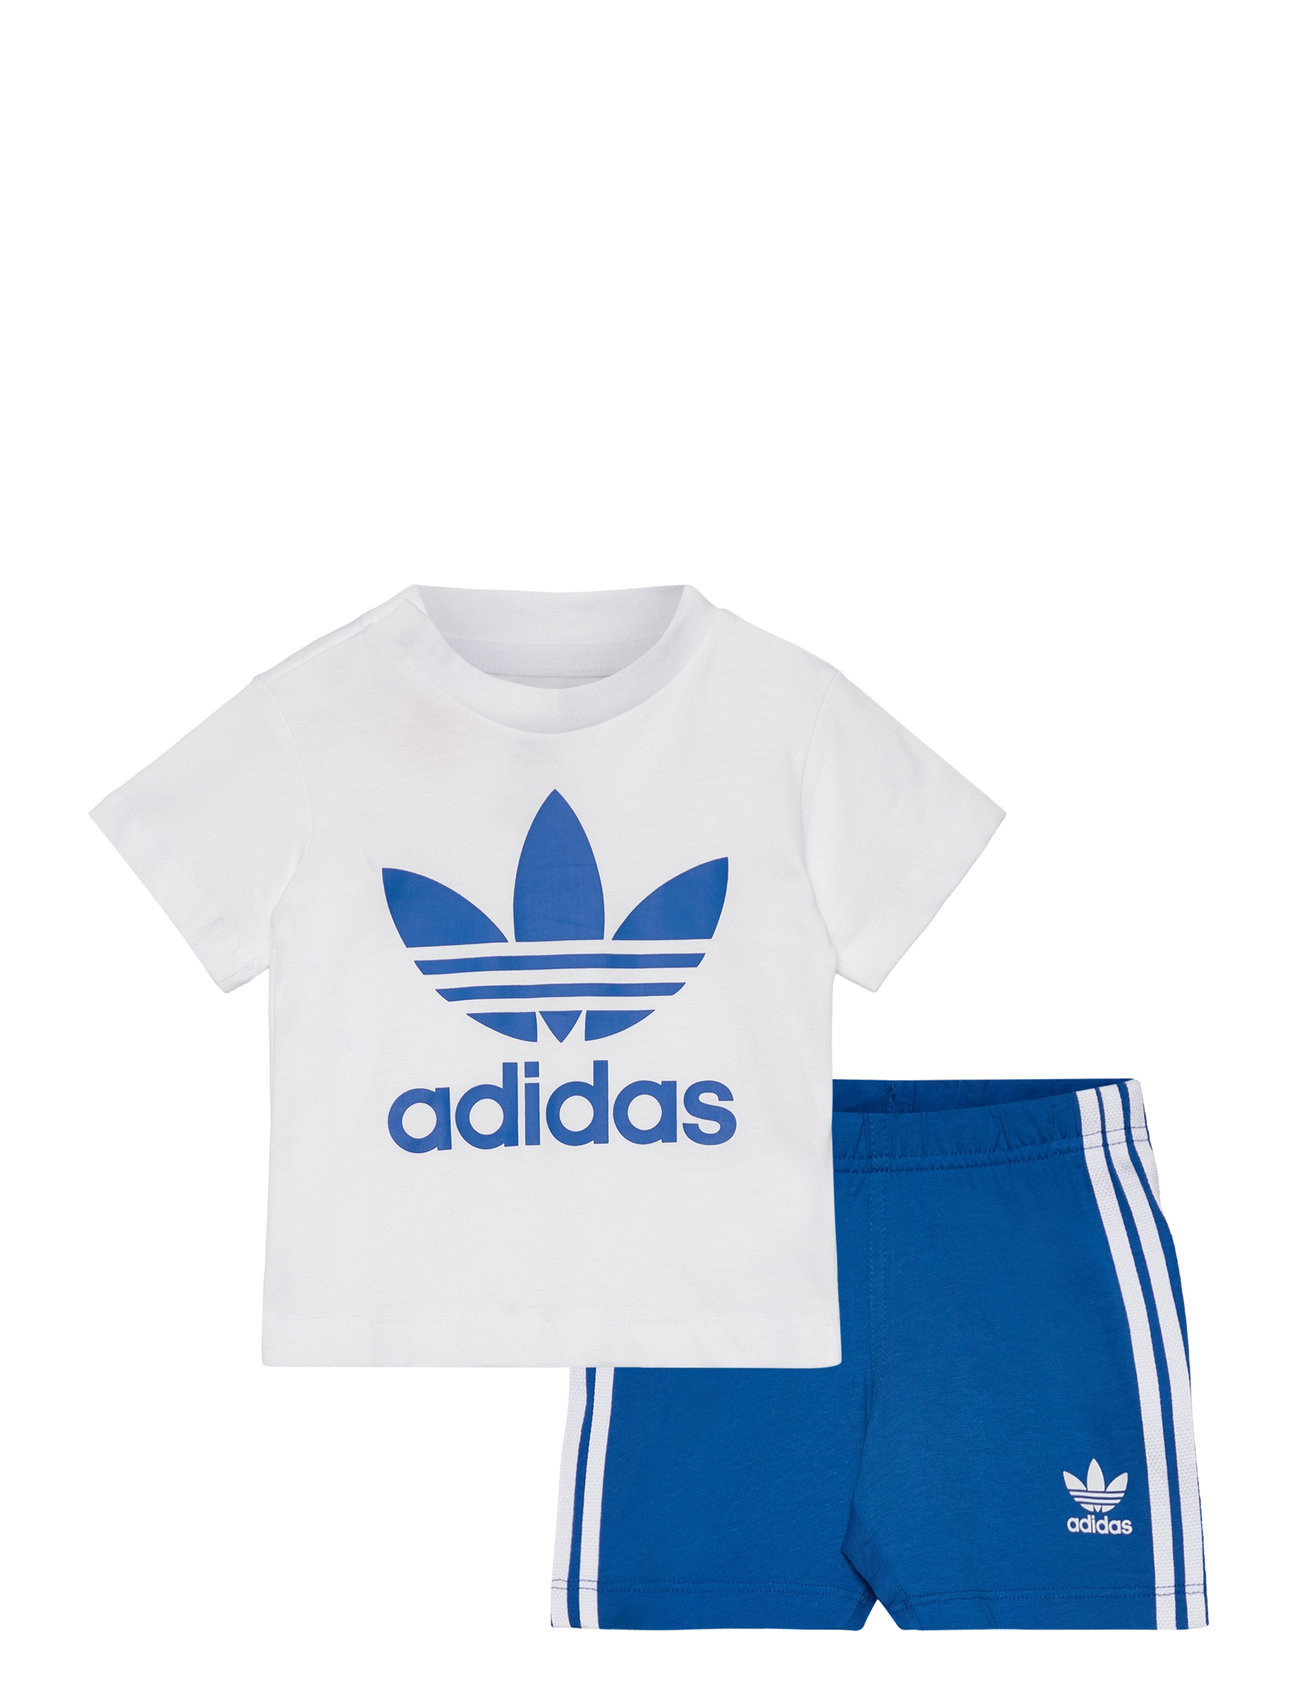 Short Tee Set Sport Sets With Short-sleeved T-shirt Blue Adidas Originals